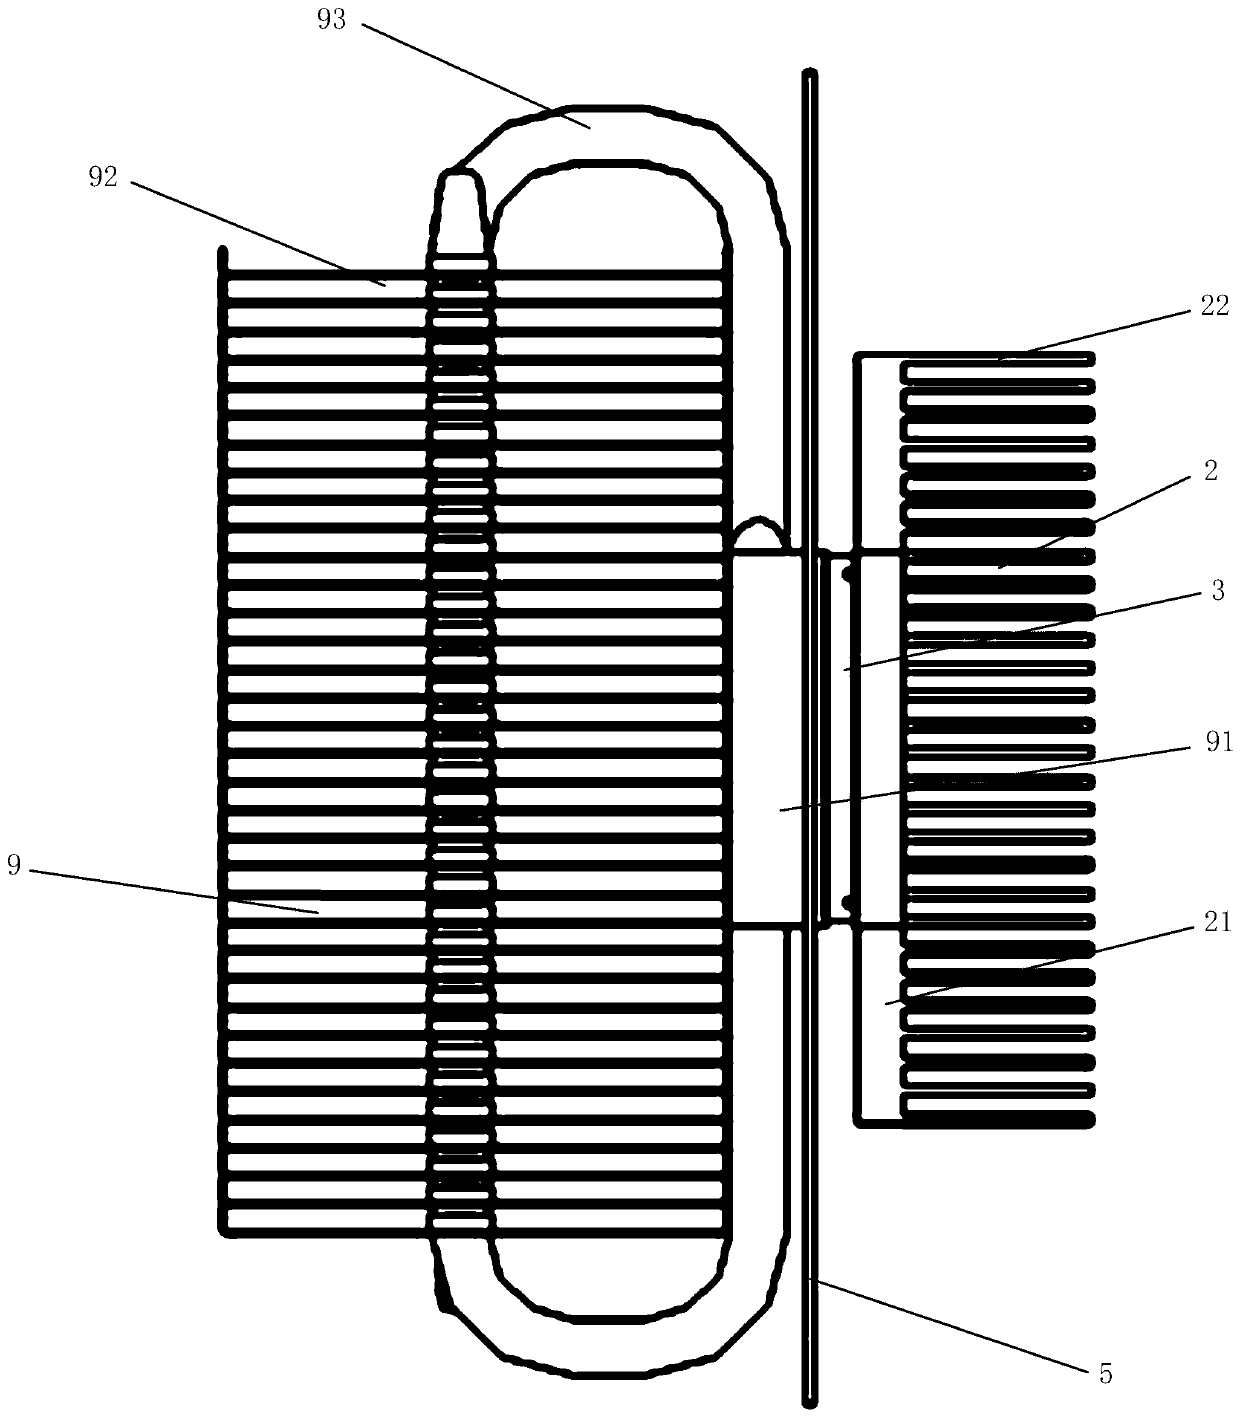 A semiconductor dehumidifier